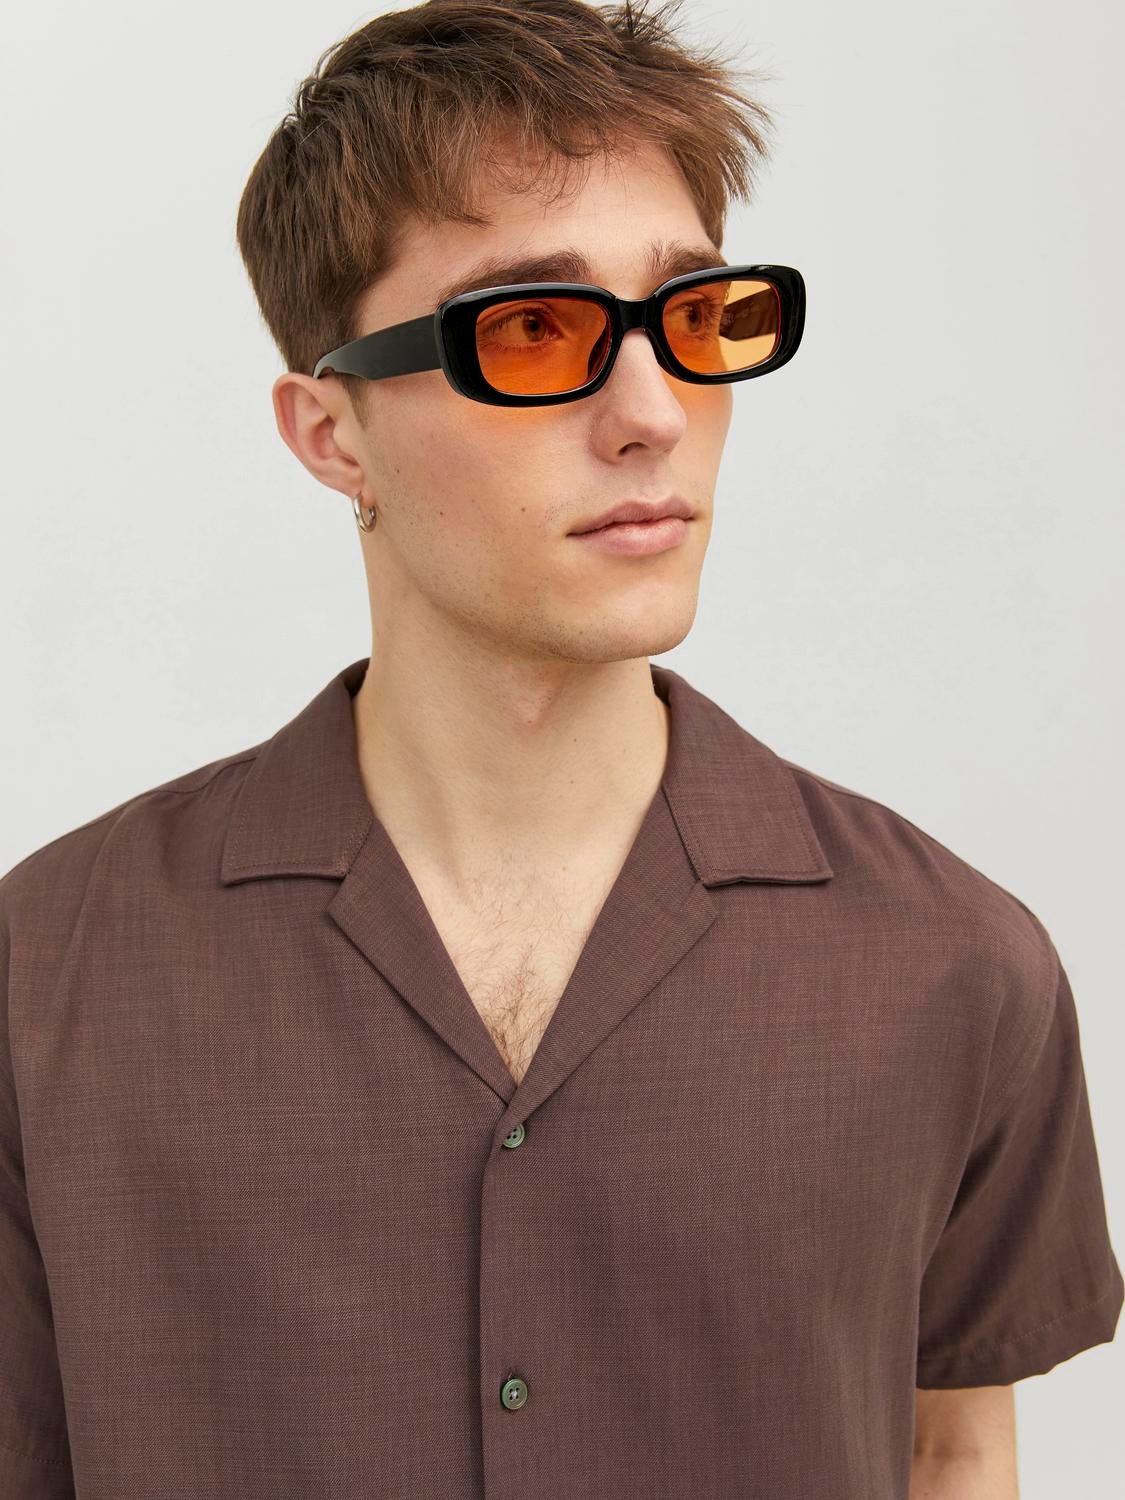 Jack & Jones Plastic Rectangular sunglasses -Black - 12234706